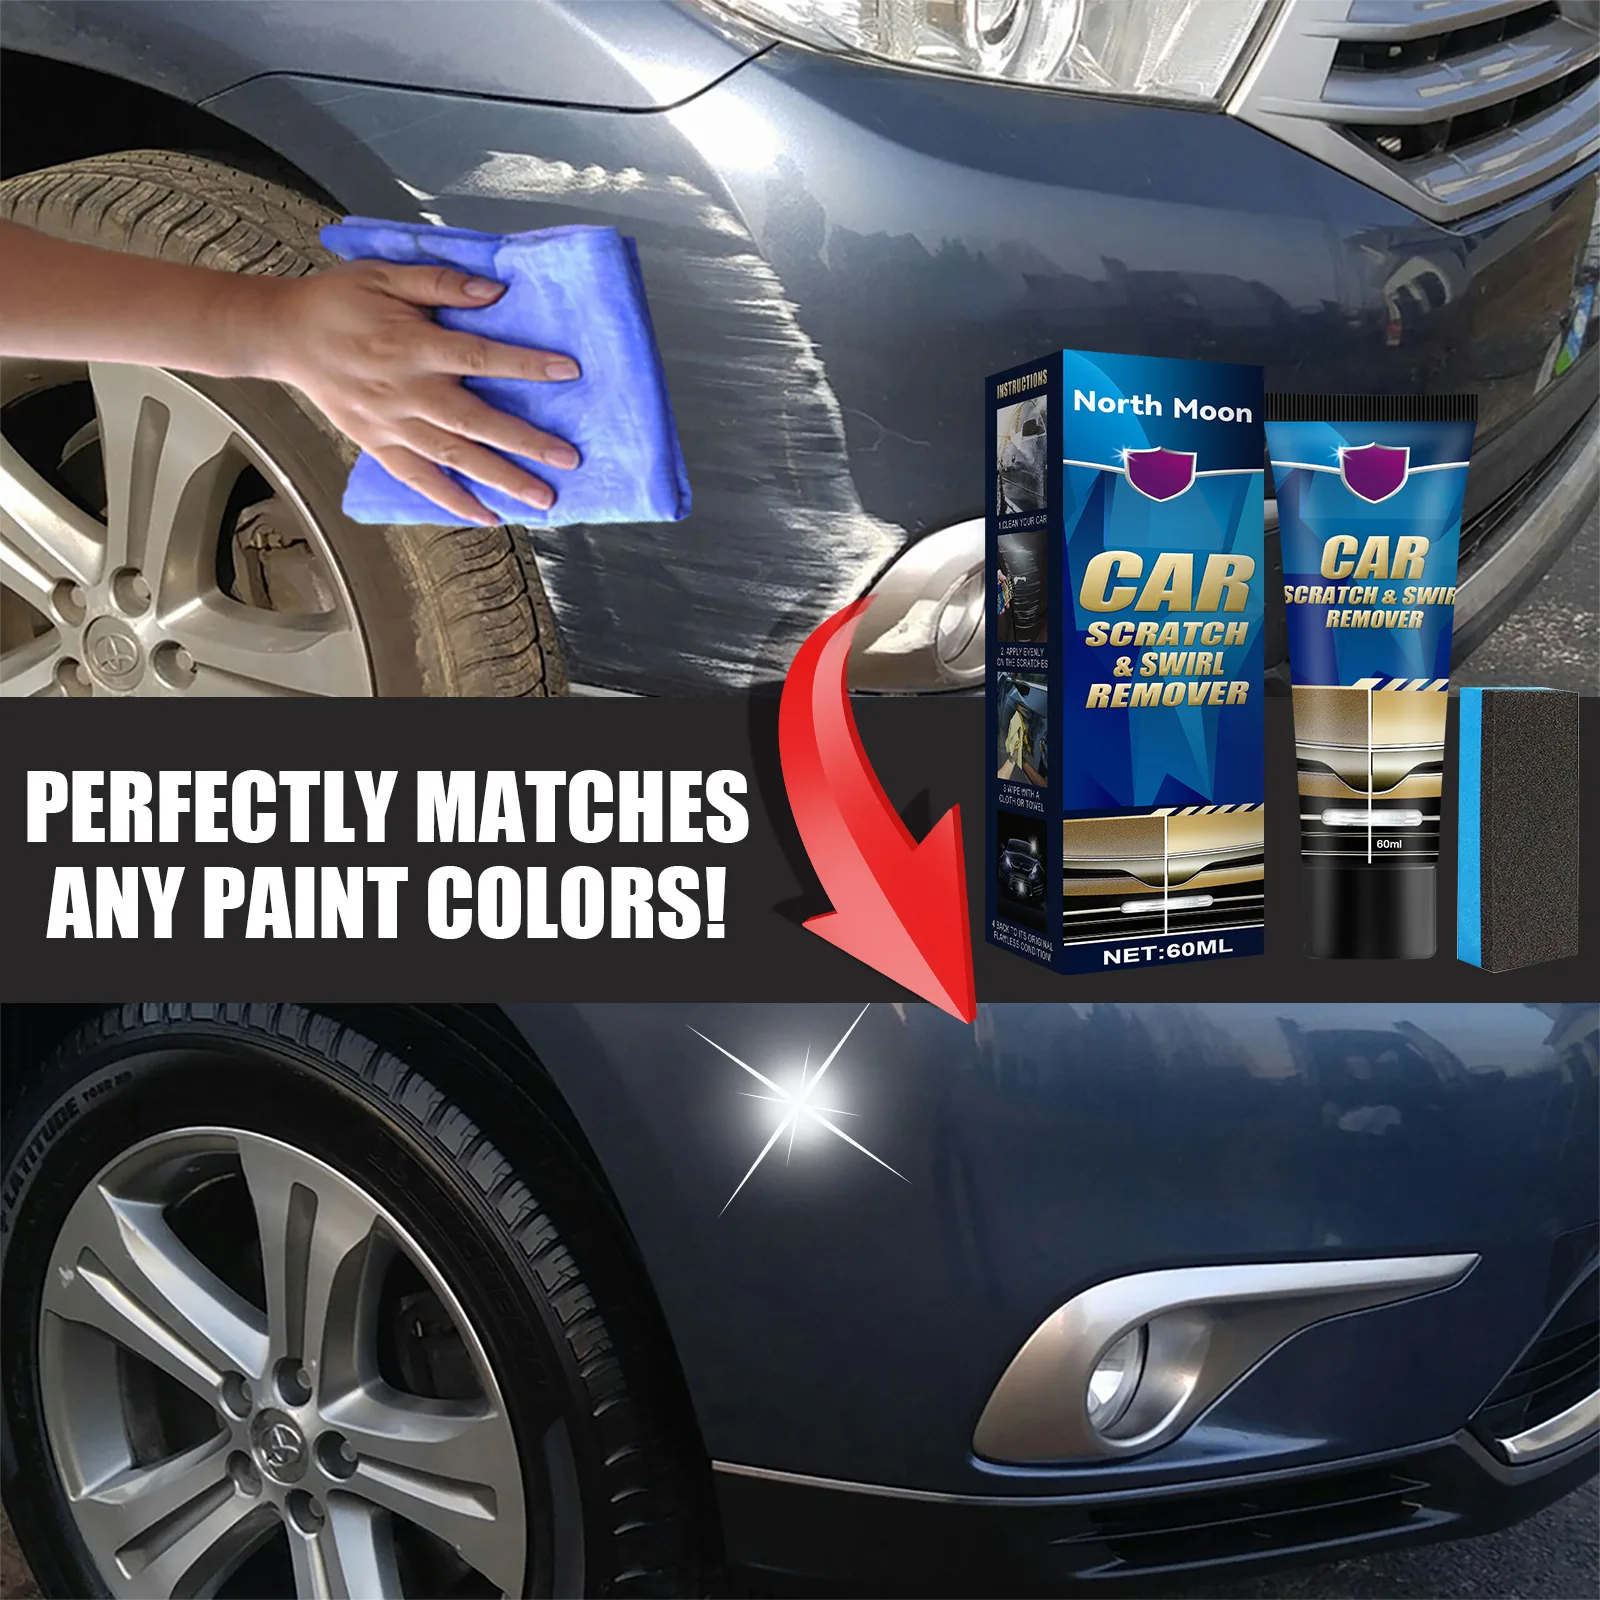 Car Scratch Remover,Car Paint Scratch Repair Kit,Car Scratch Repair Paste Wax Swirl Remover for Paint Scratches,Maintenance,Repairs,Touch-Ups